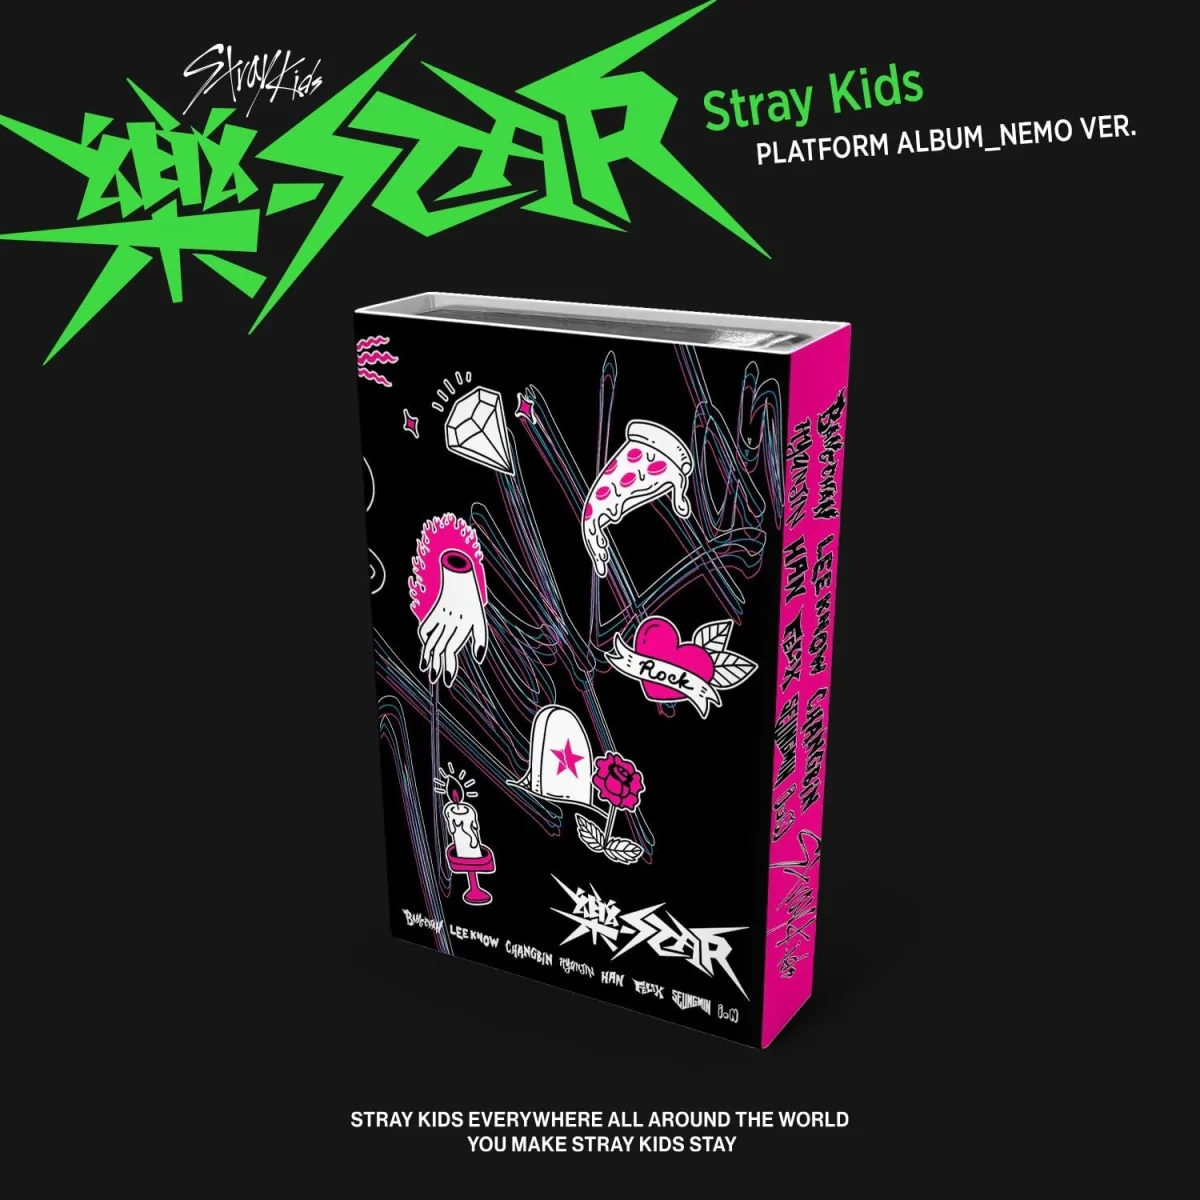 Stray Kids - 樂-STAR Rock Star (PLATFORM ALBUM_NEMO VERSION) (Mini Album) 